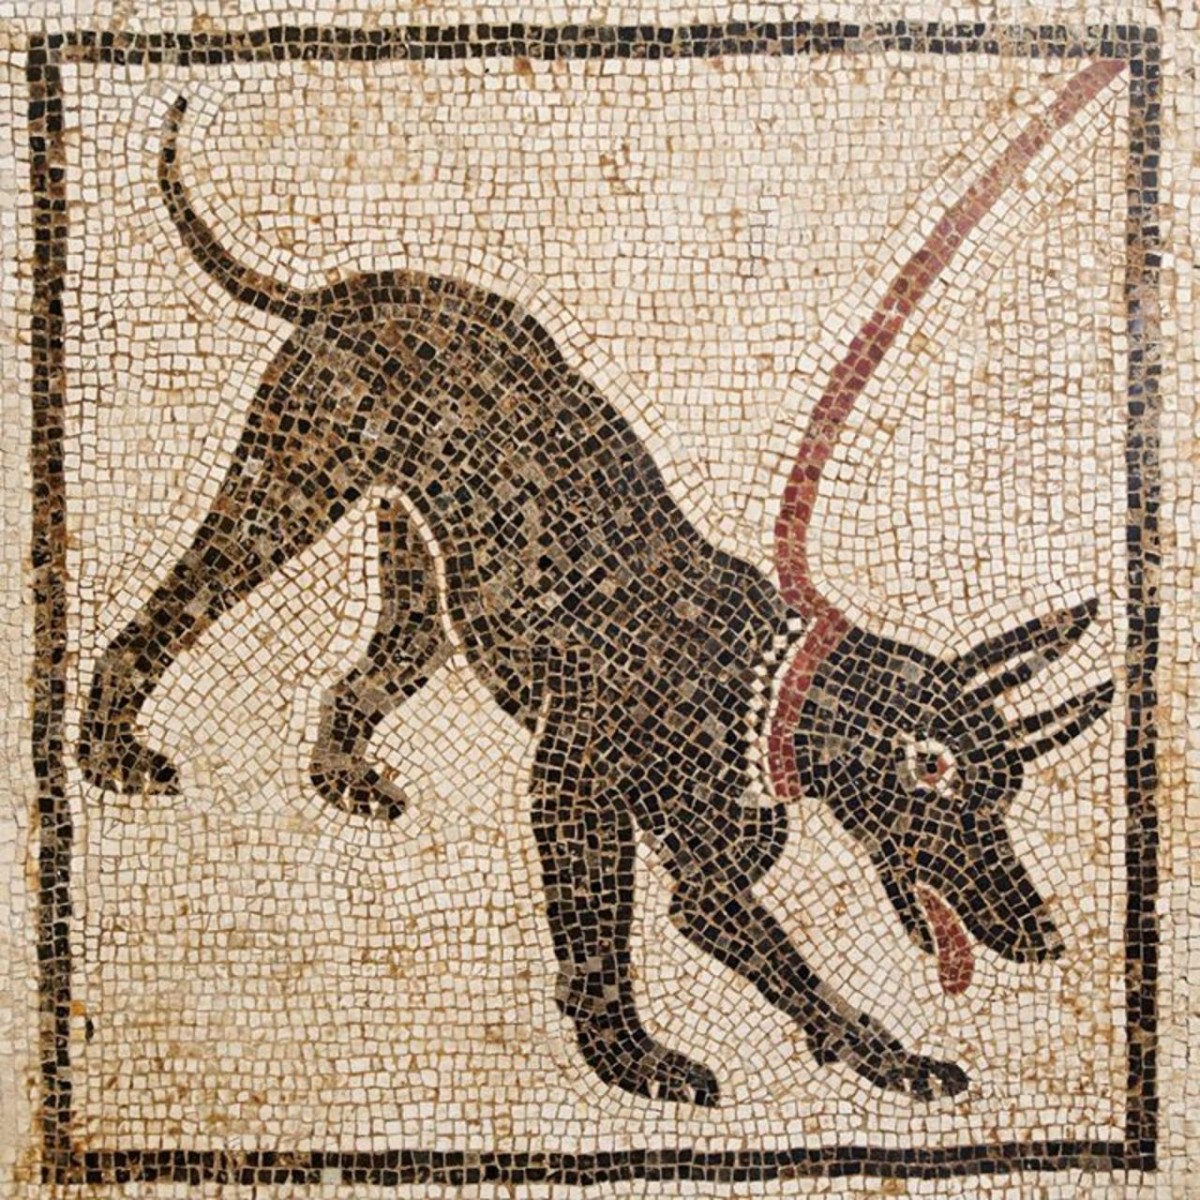 Tấm mosaic tại Pompeii có tên ‘Cave Canem’ (Beware the dog)  thế kỷ thứ I sau CN